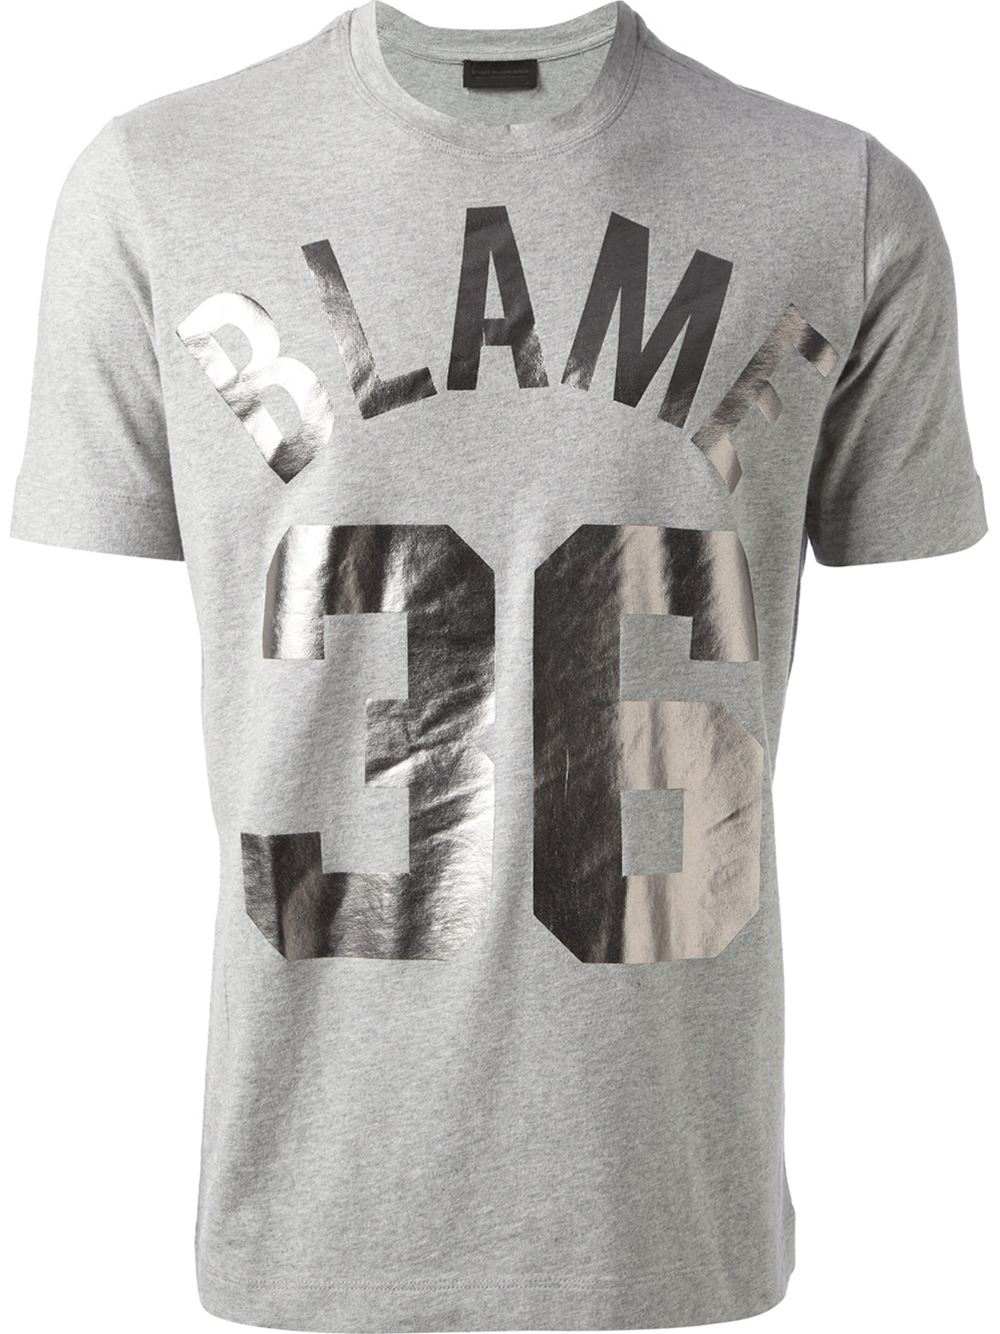 Lyst - Diesel Black Gold Metallic Print T-Shirt in Gray for Men